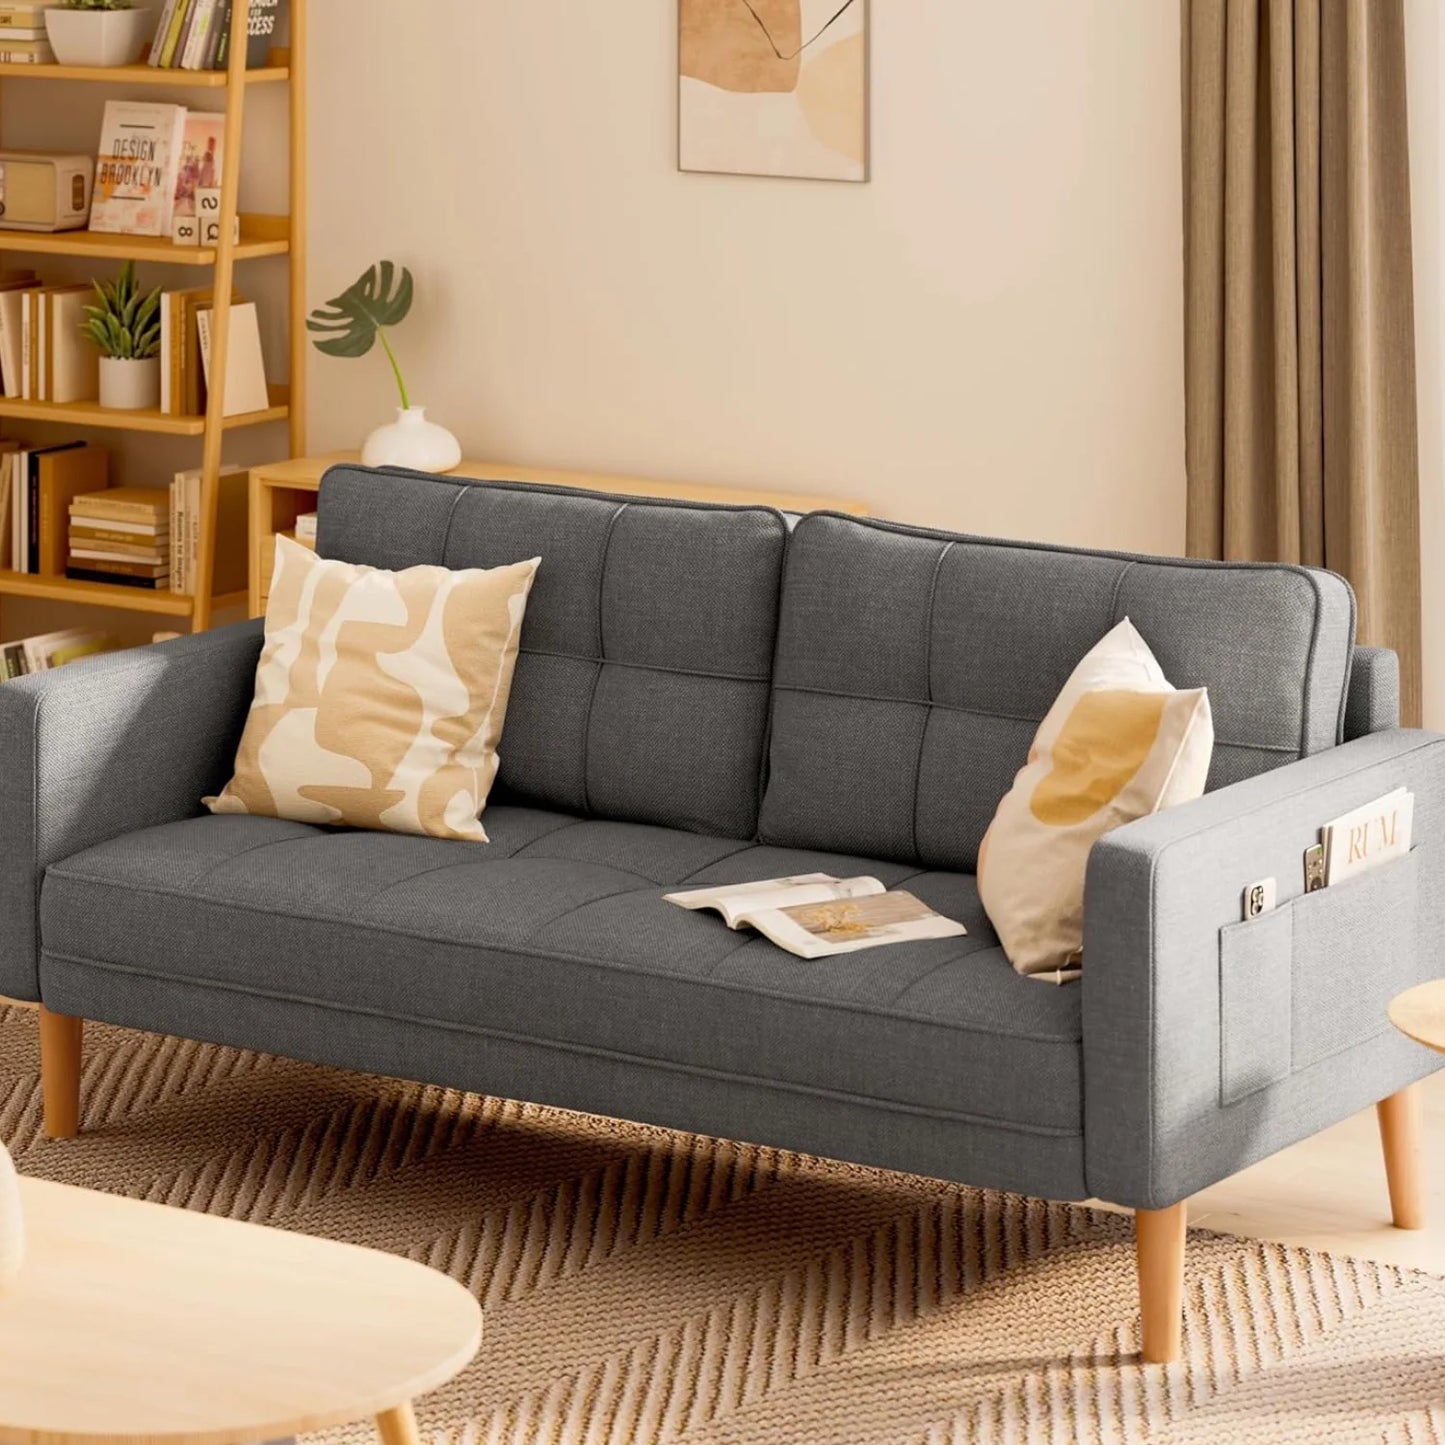 Aiho Modern Comfort Backrest Loveseat Sofa with Sturdy Wood Legs,Beige